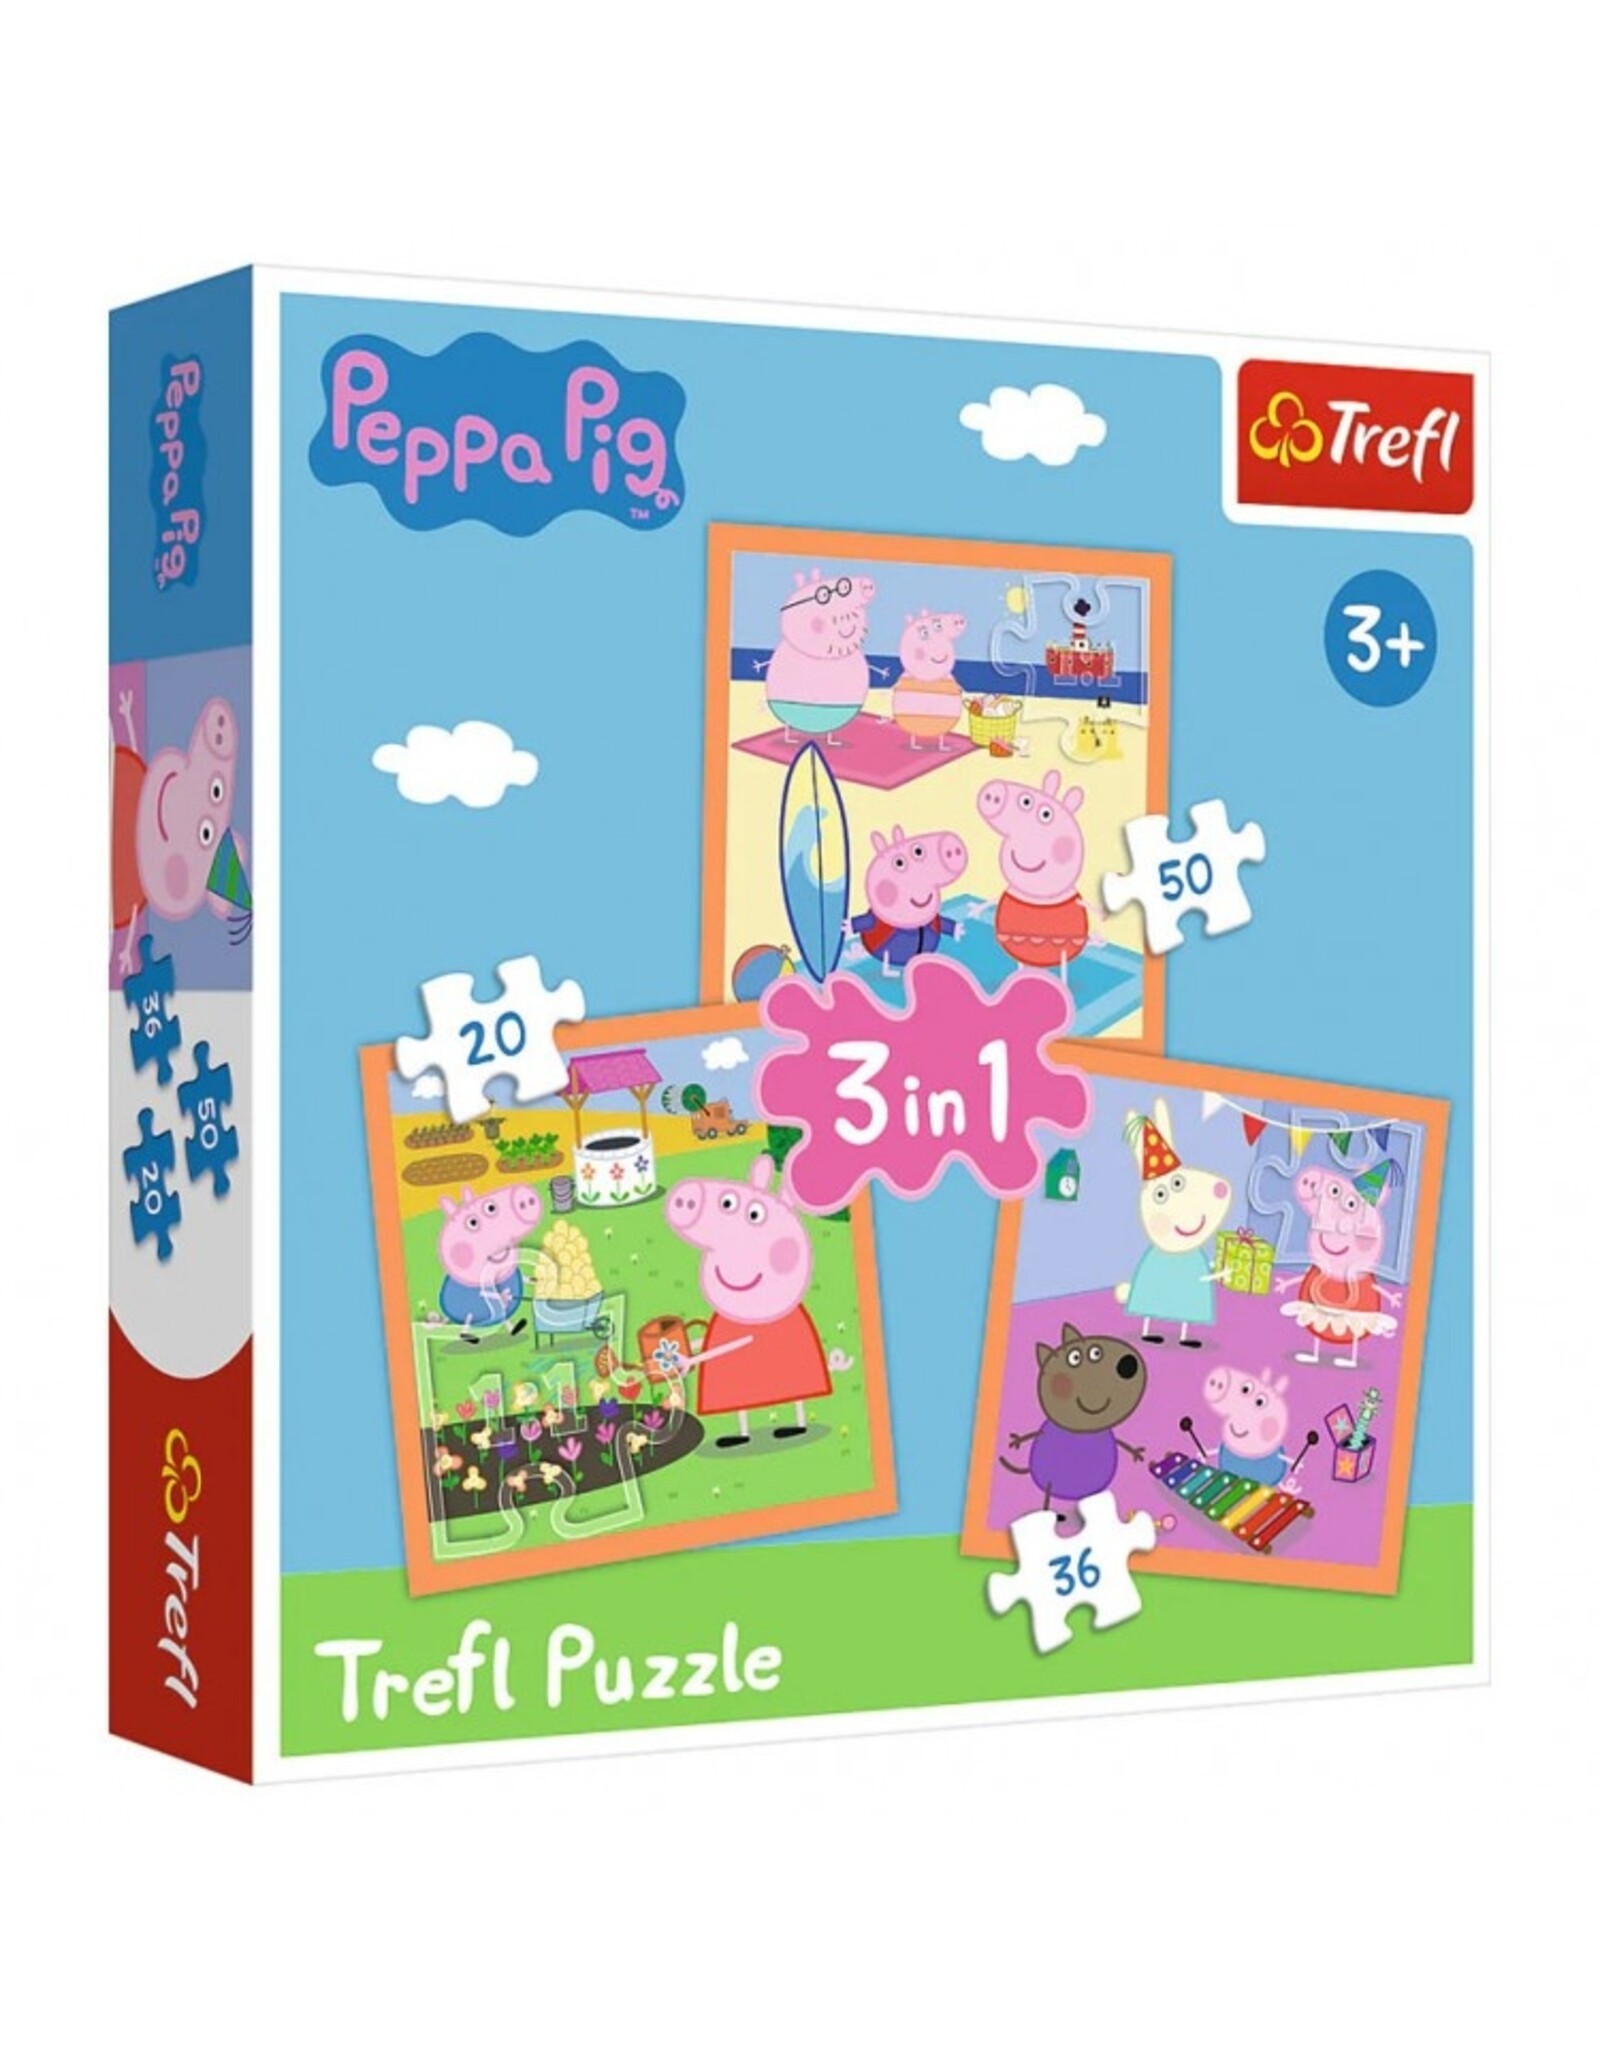 Trefl Puzzle: Peppa Pig 3 in 1 20/36/50pc